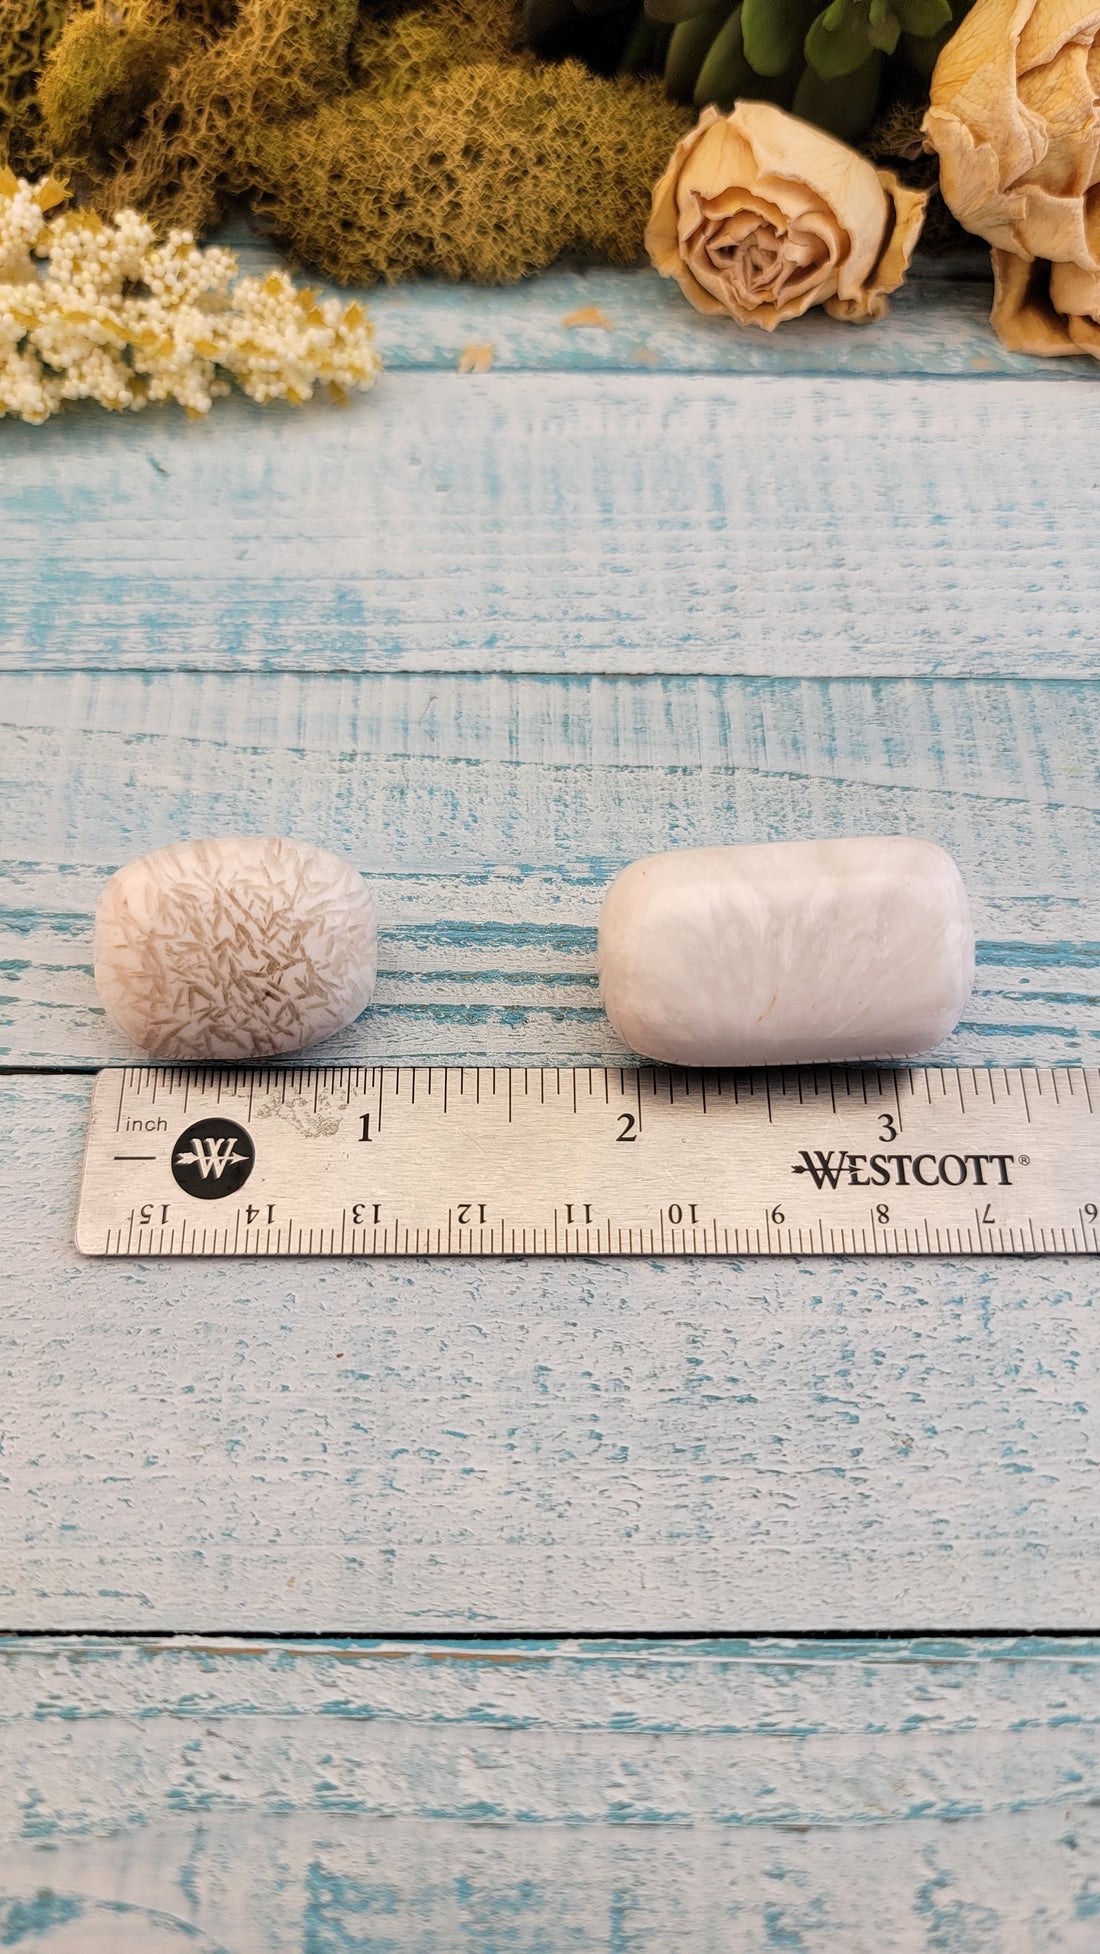 tumbled scolecite stones compared on ruler